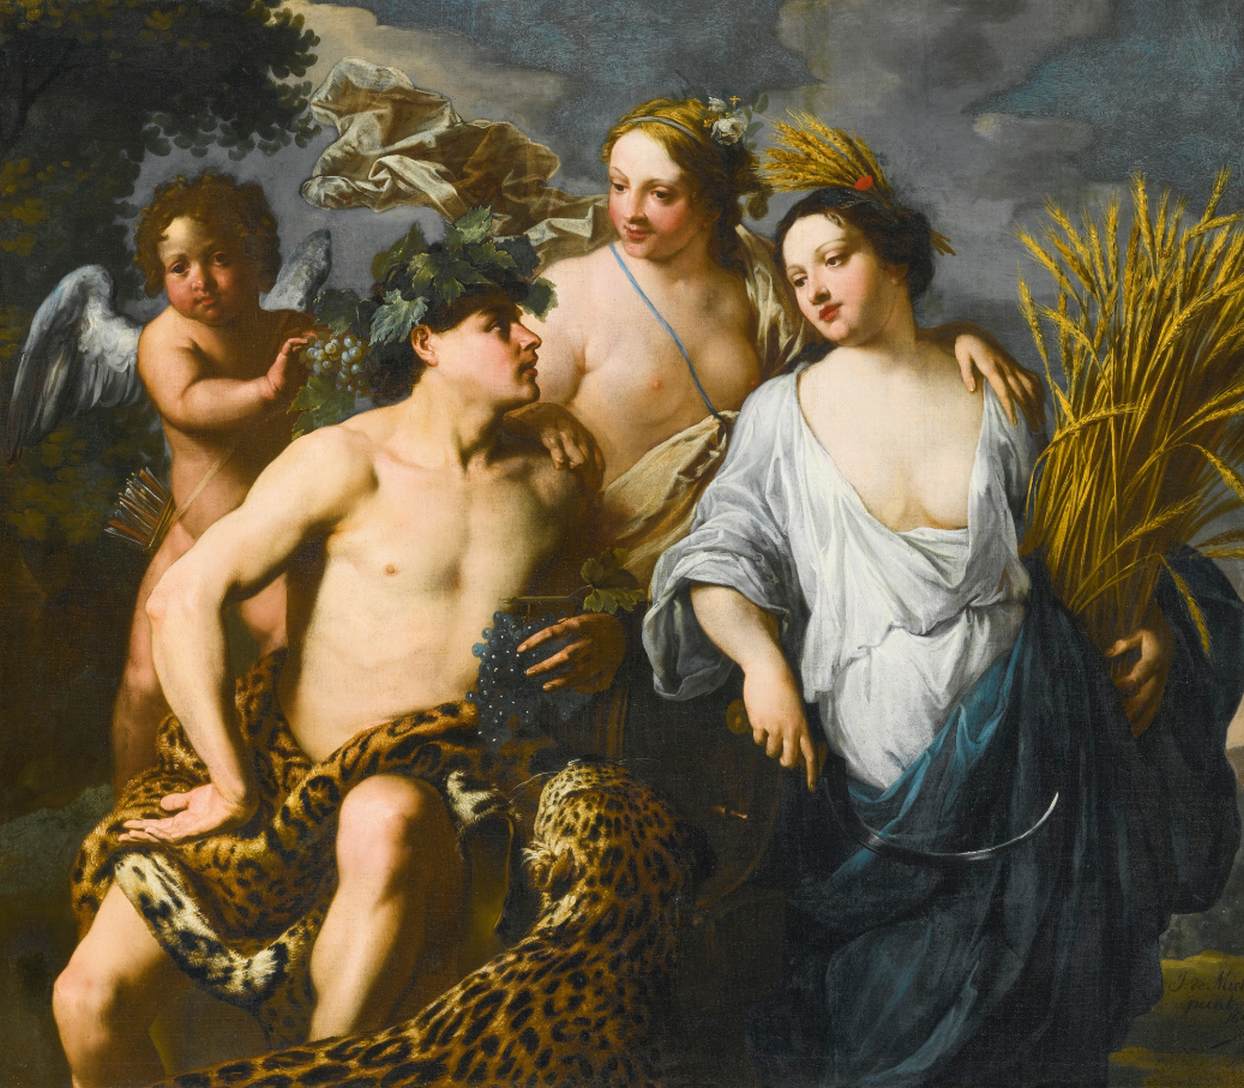 Ceres, Baco y Venus ('sine Cerere Et Baccho Friget Venus')